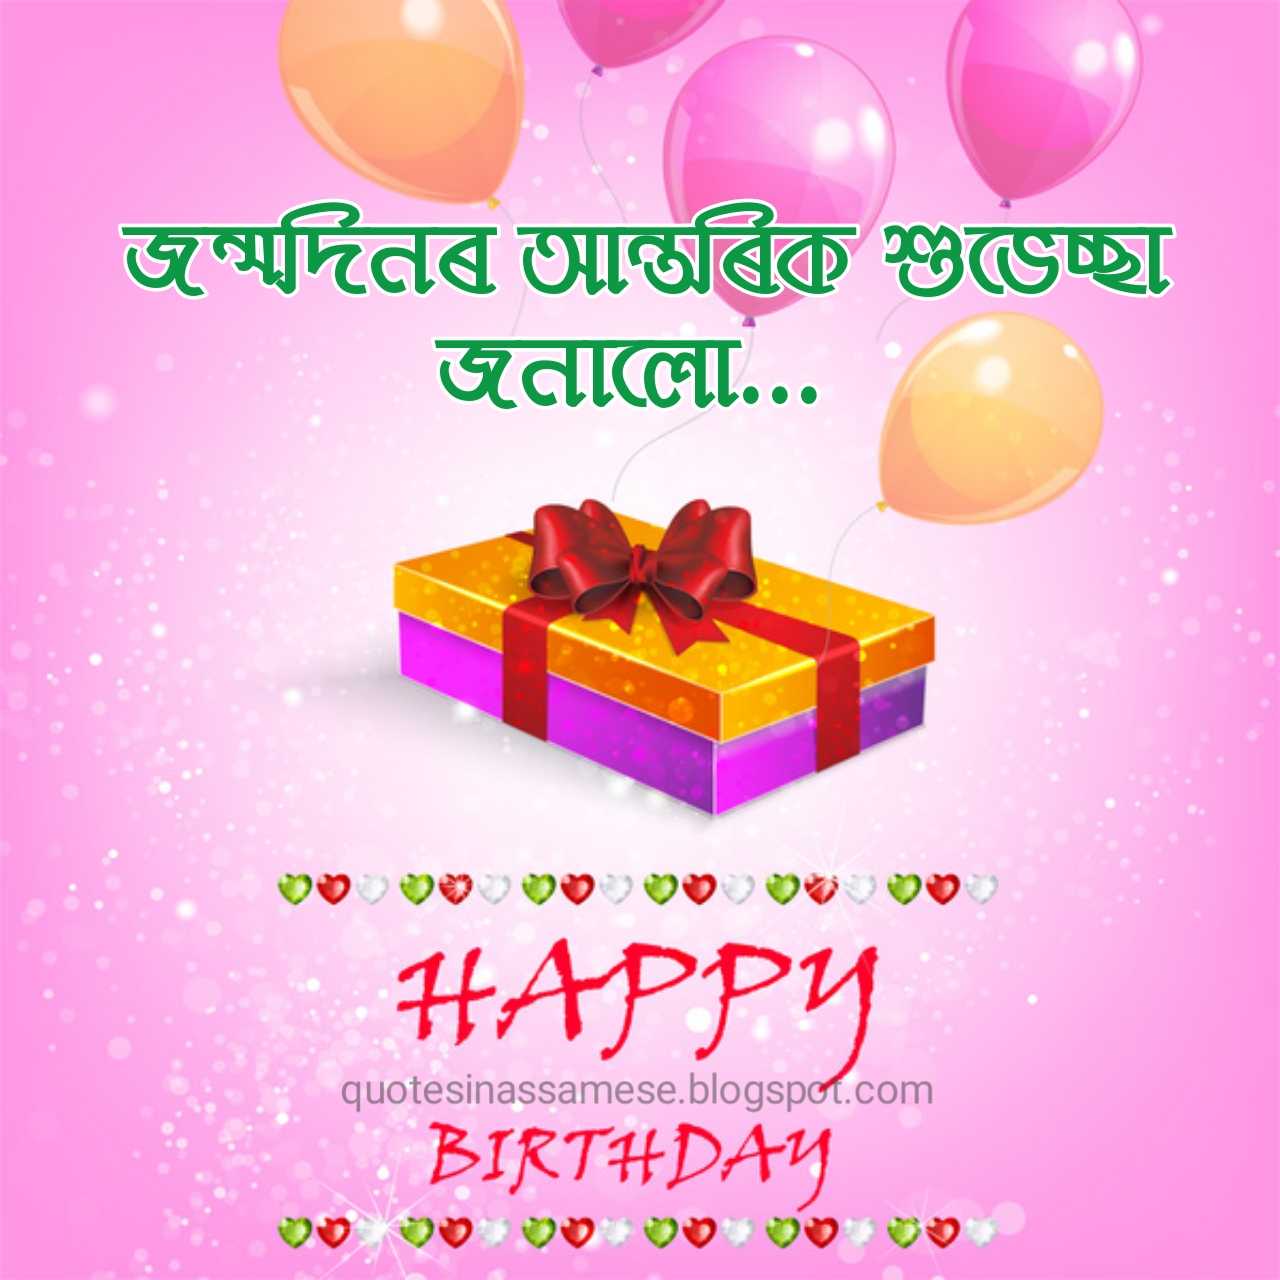 Happy Birthday Wish in Assamese Language